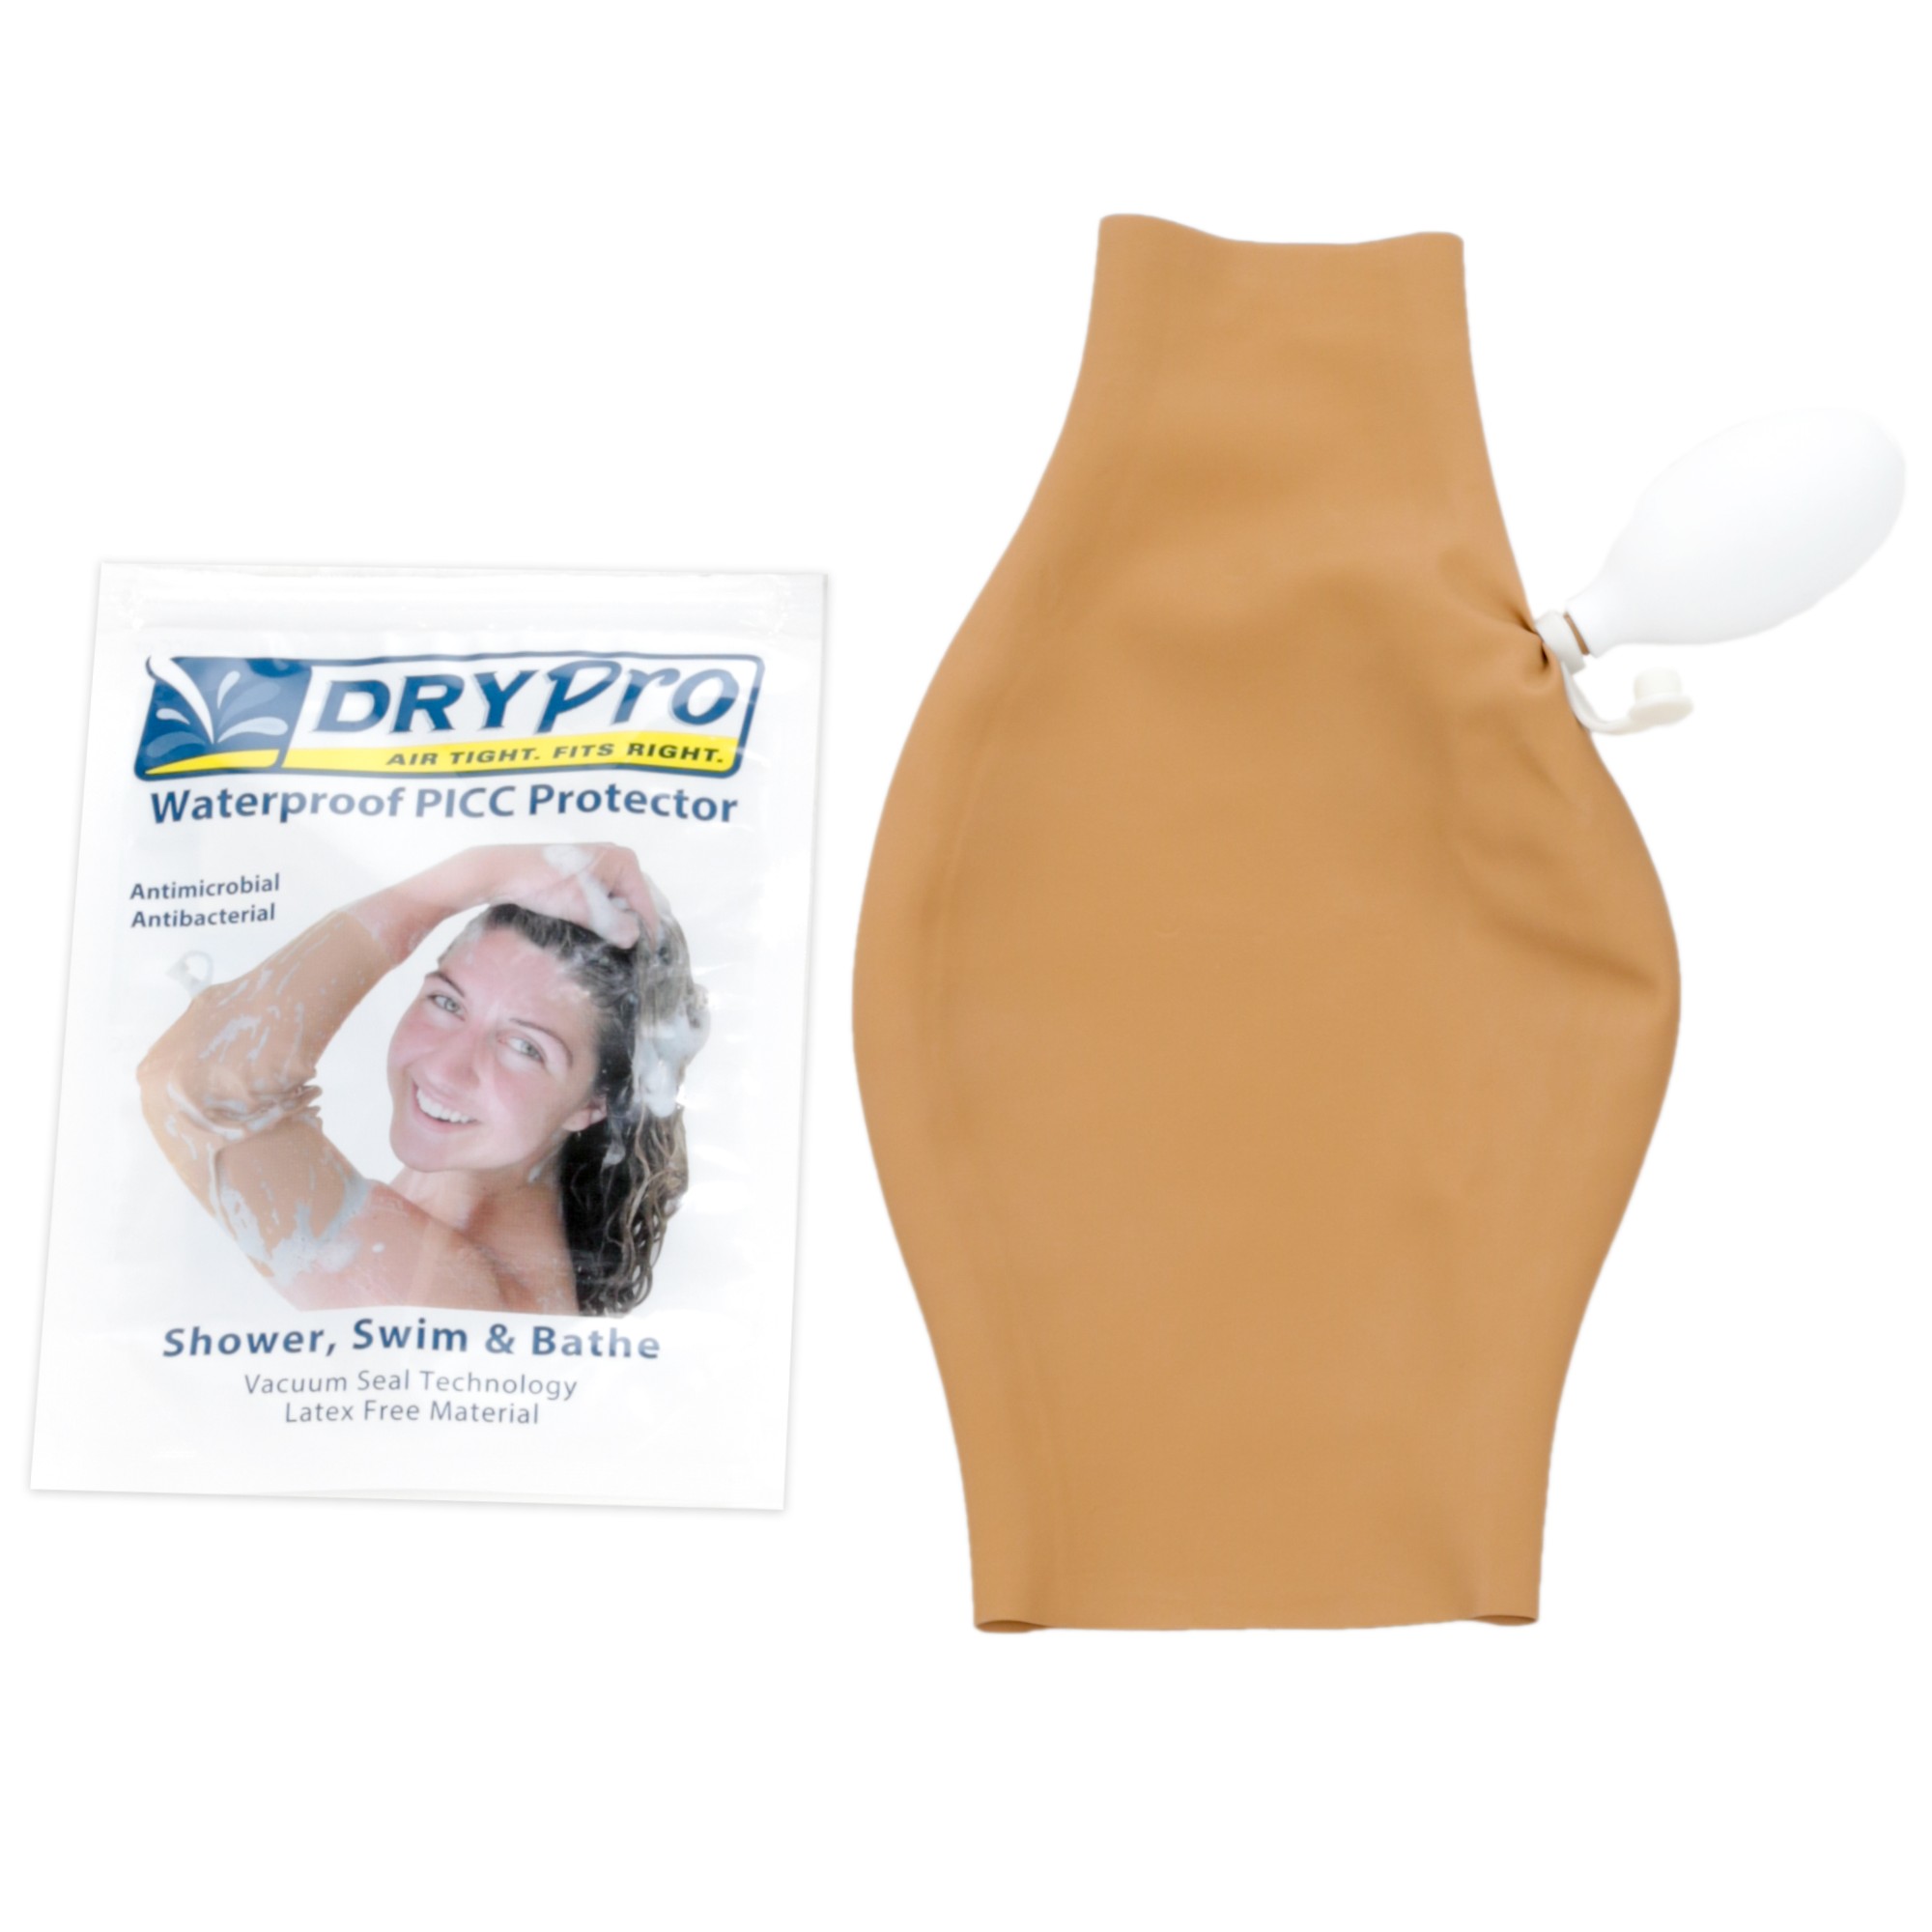 DryPro PICC Protector